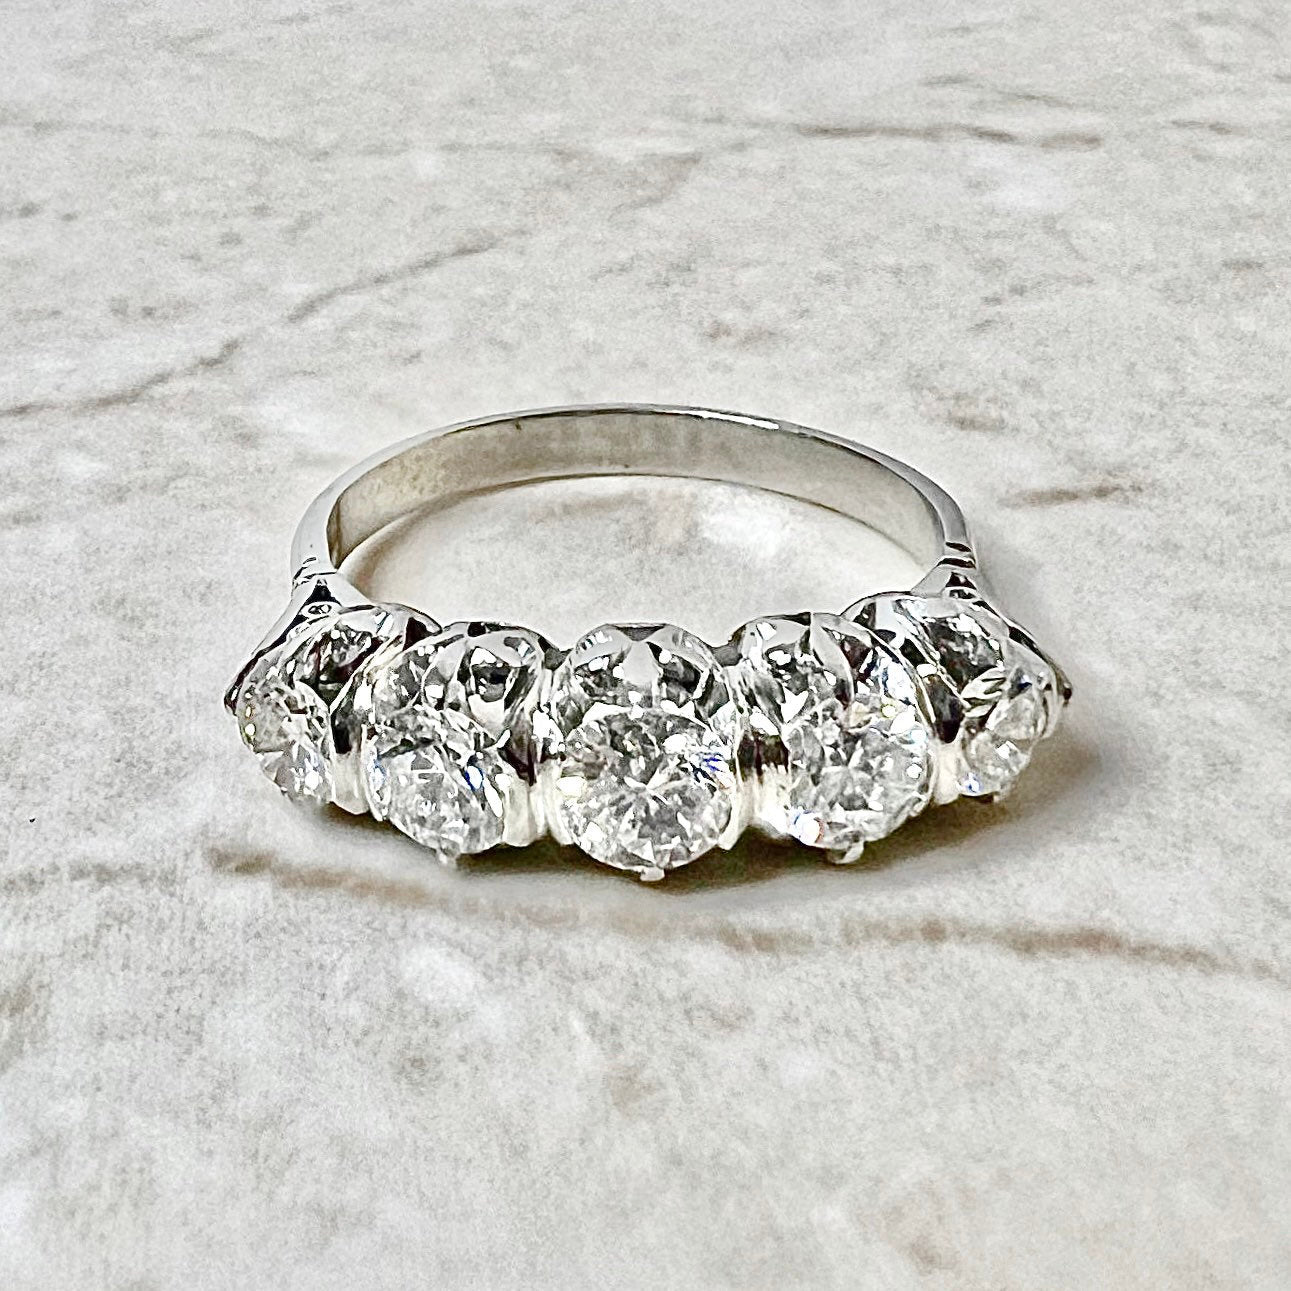 1.25 CT Vintage Platinum Diamond Band Ring - Platinum 5 Stone Ring - Diamond Ring - Anniversary Ring - Wedding Ring - Best Gifts For Her